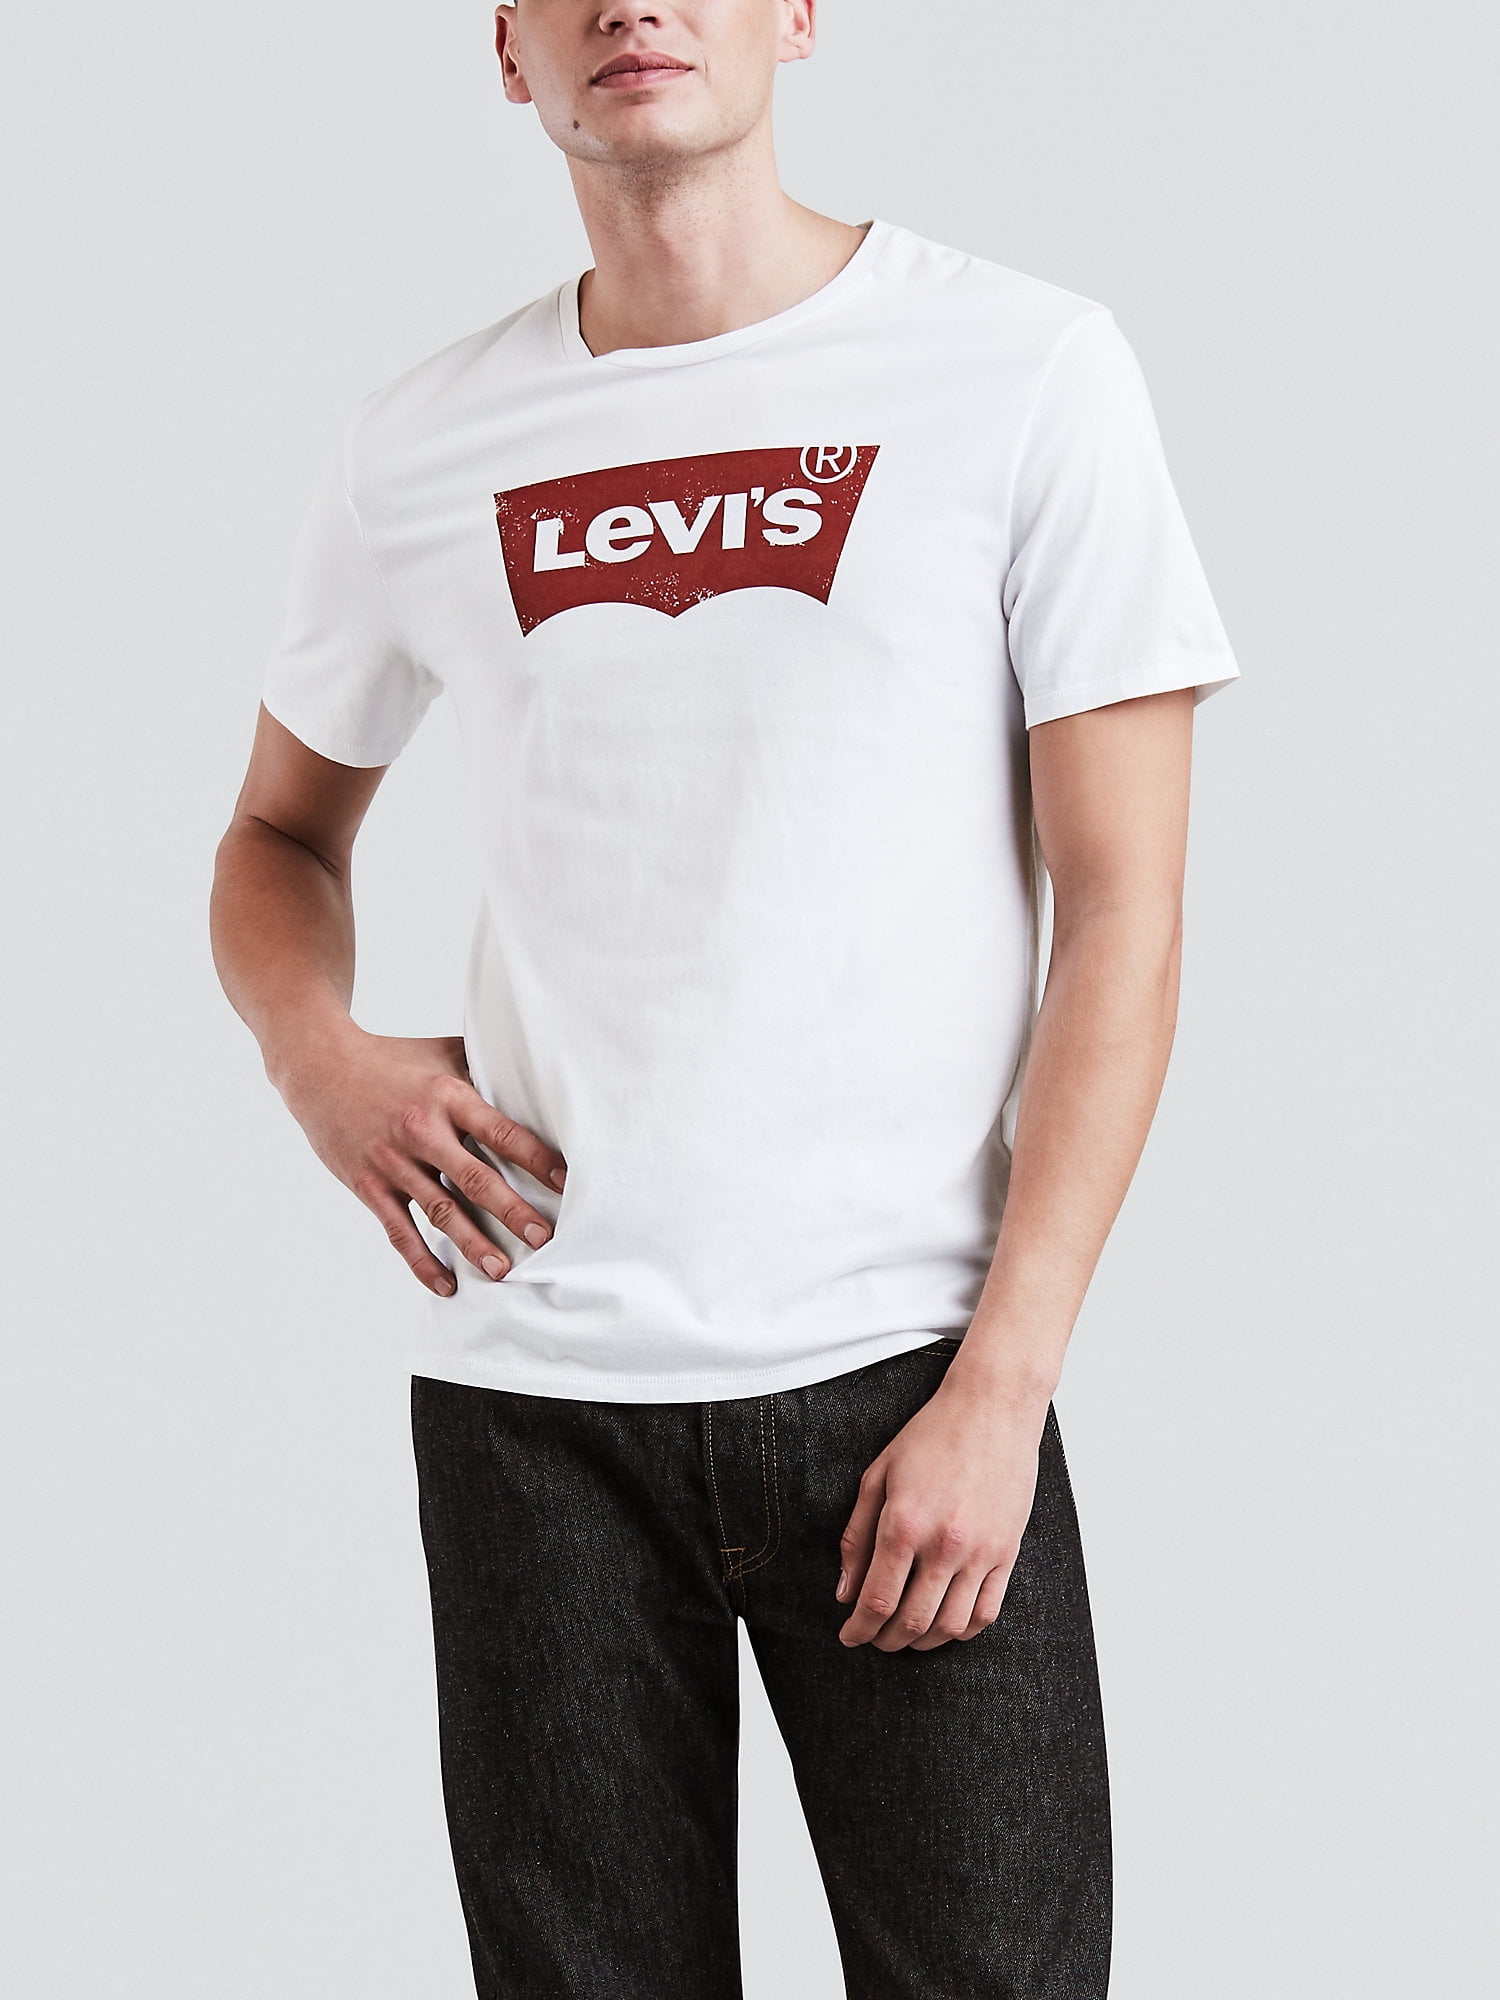 levi's batwing logo tee